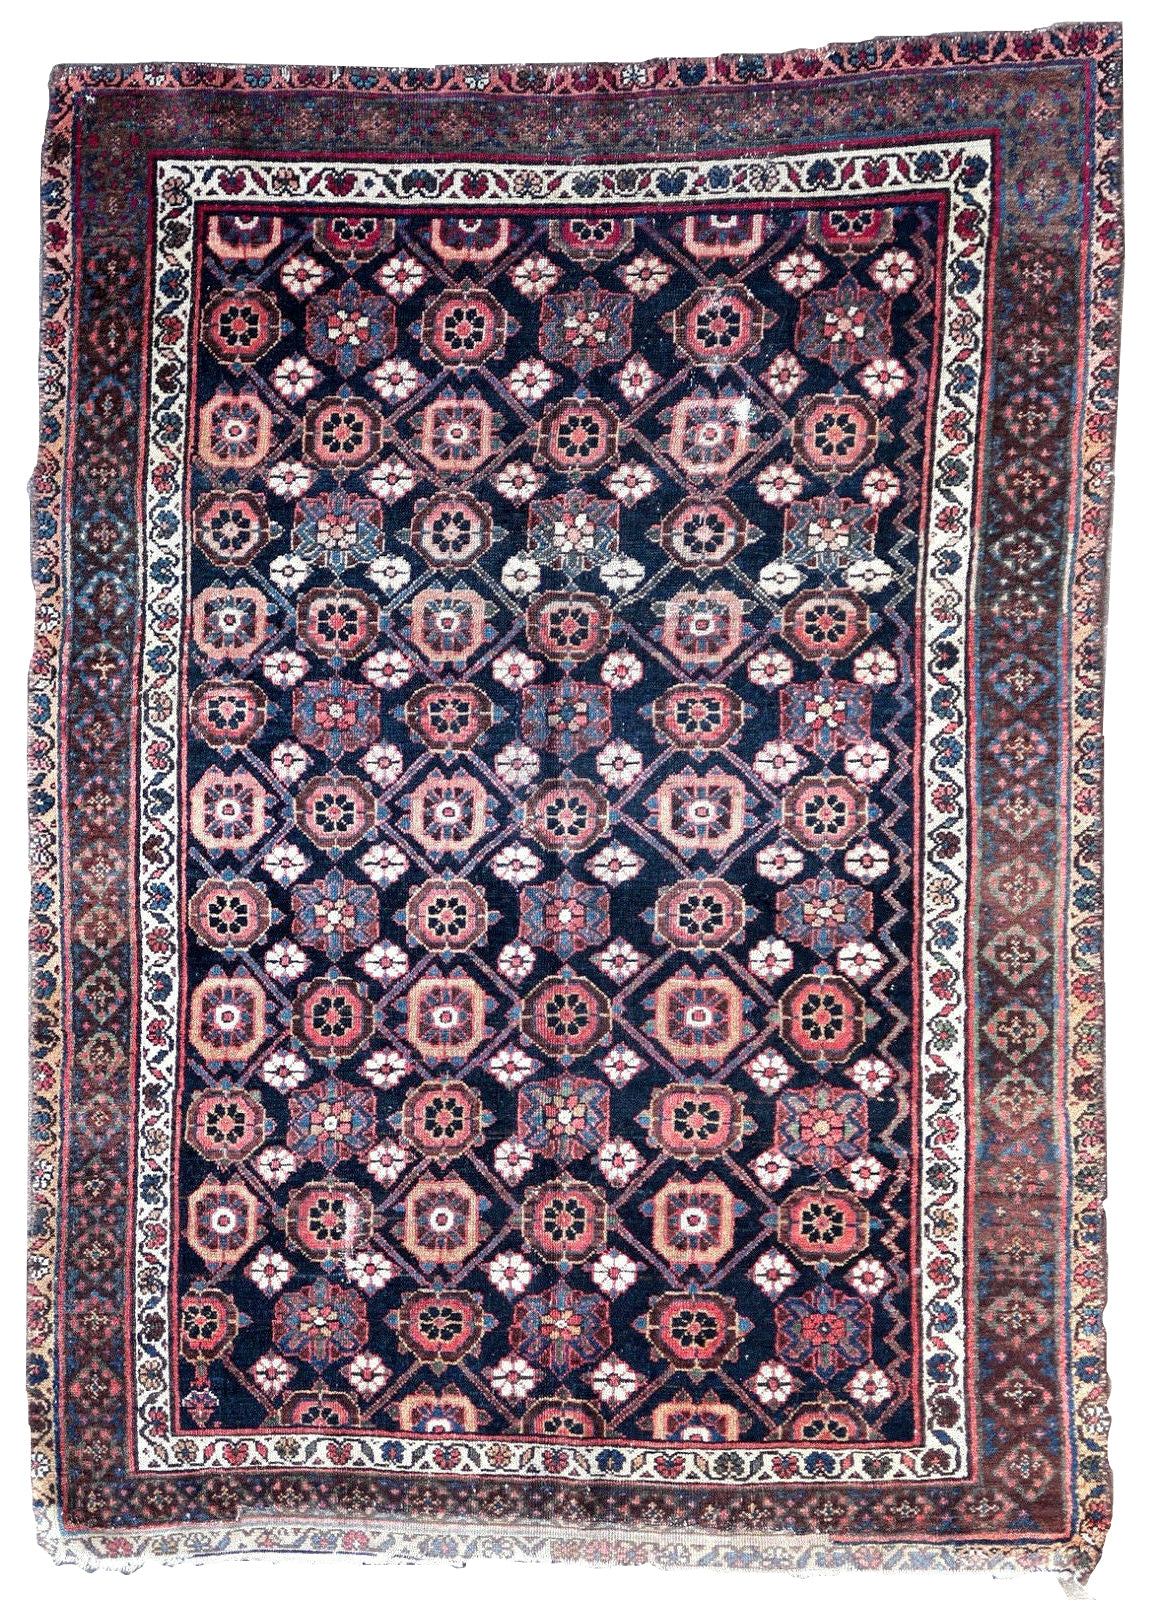 Handmade antique Persian Hamadan rug 1910s